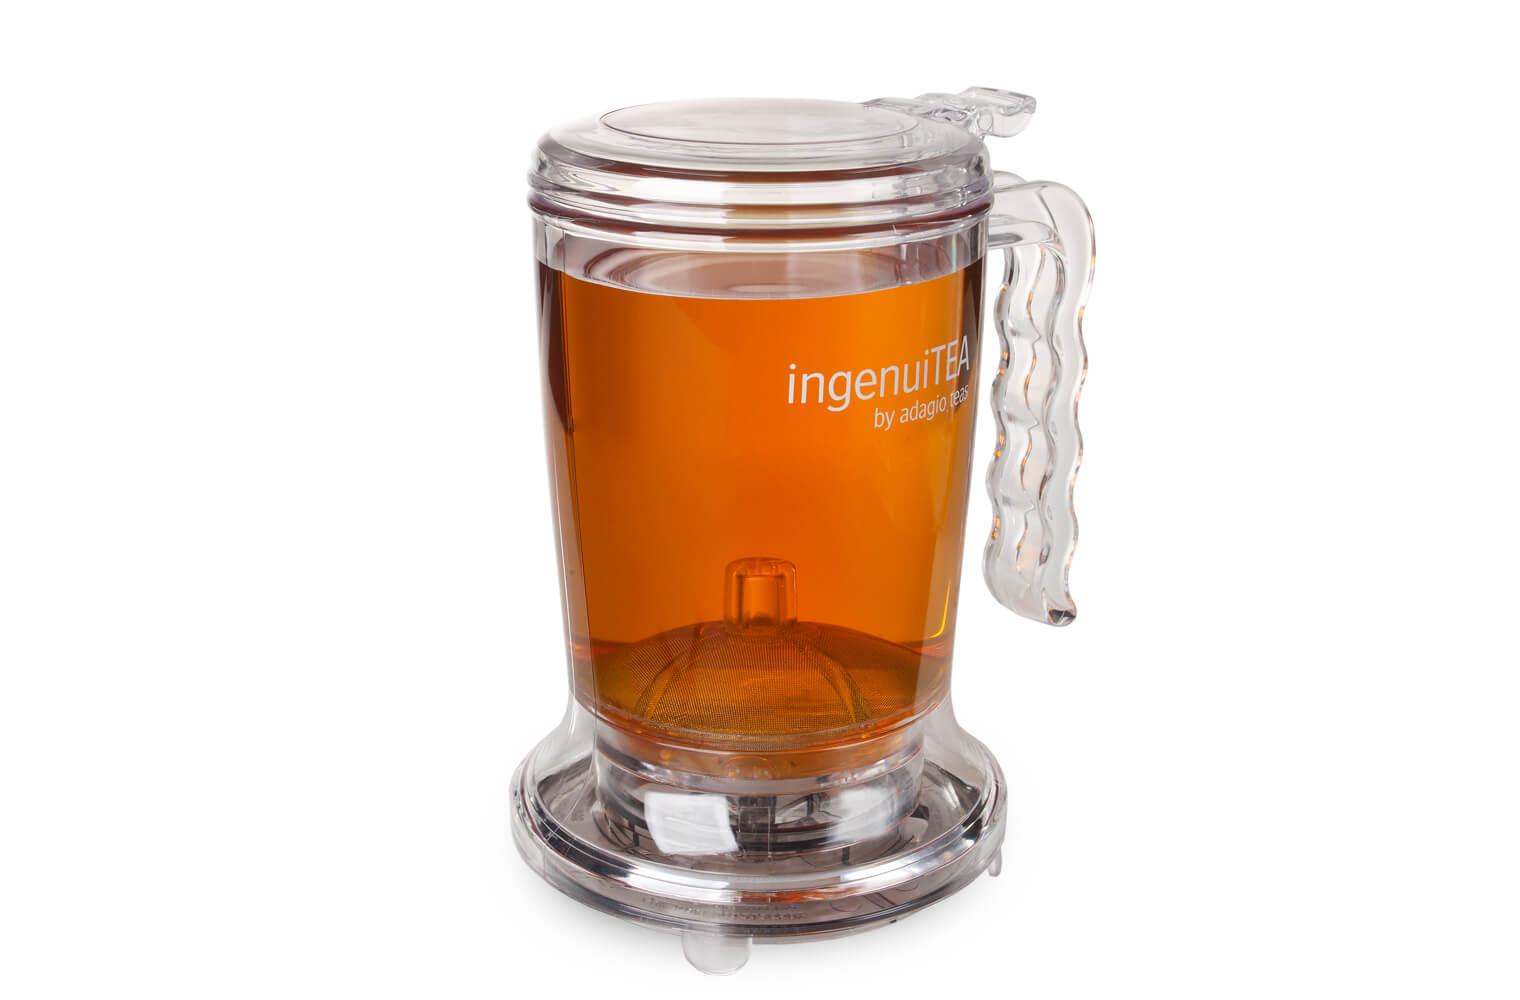 Adagio Teas 42 oz Glass Teapot Infuser